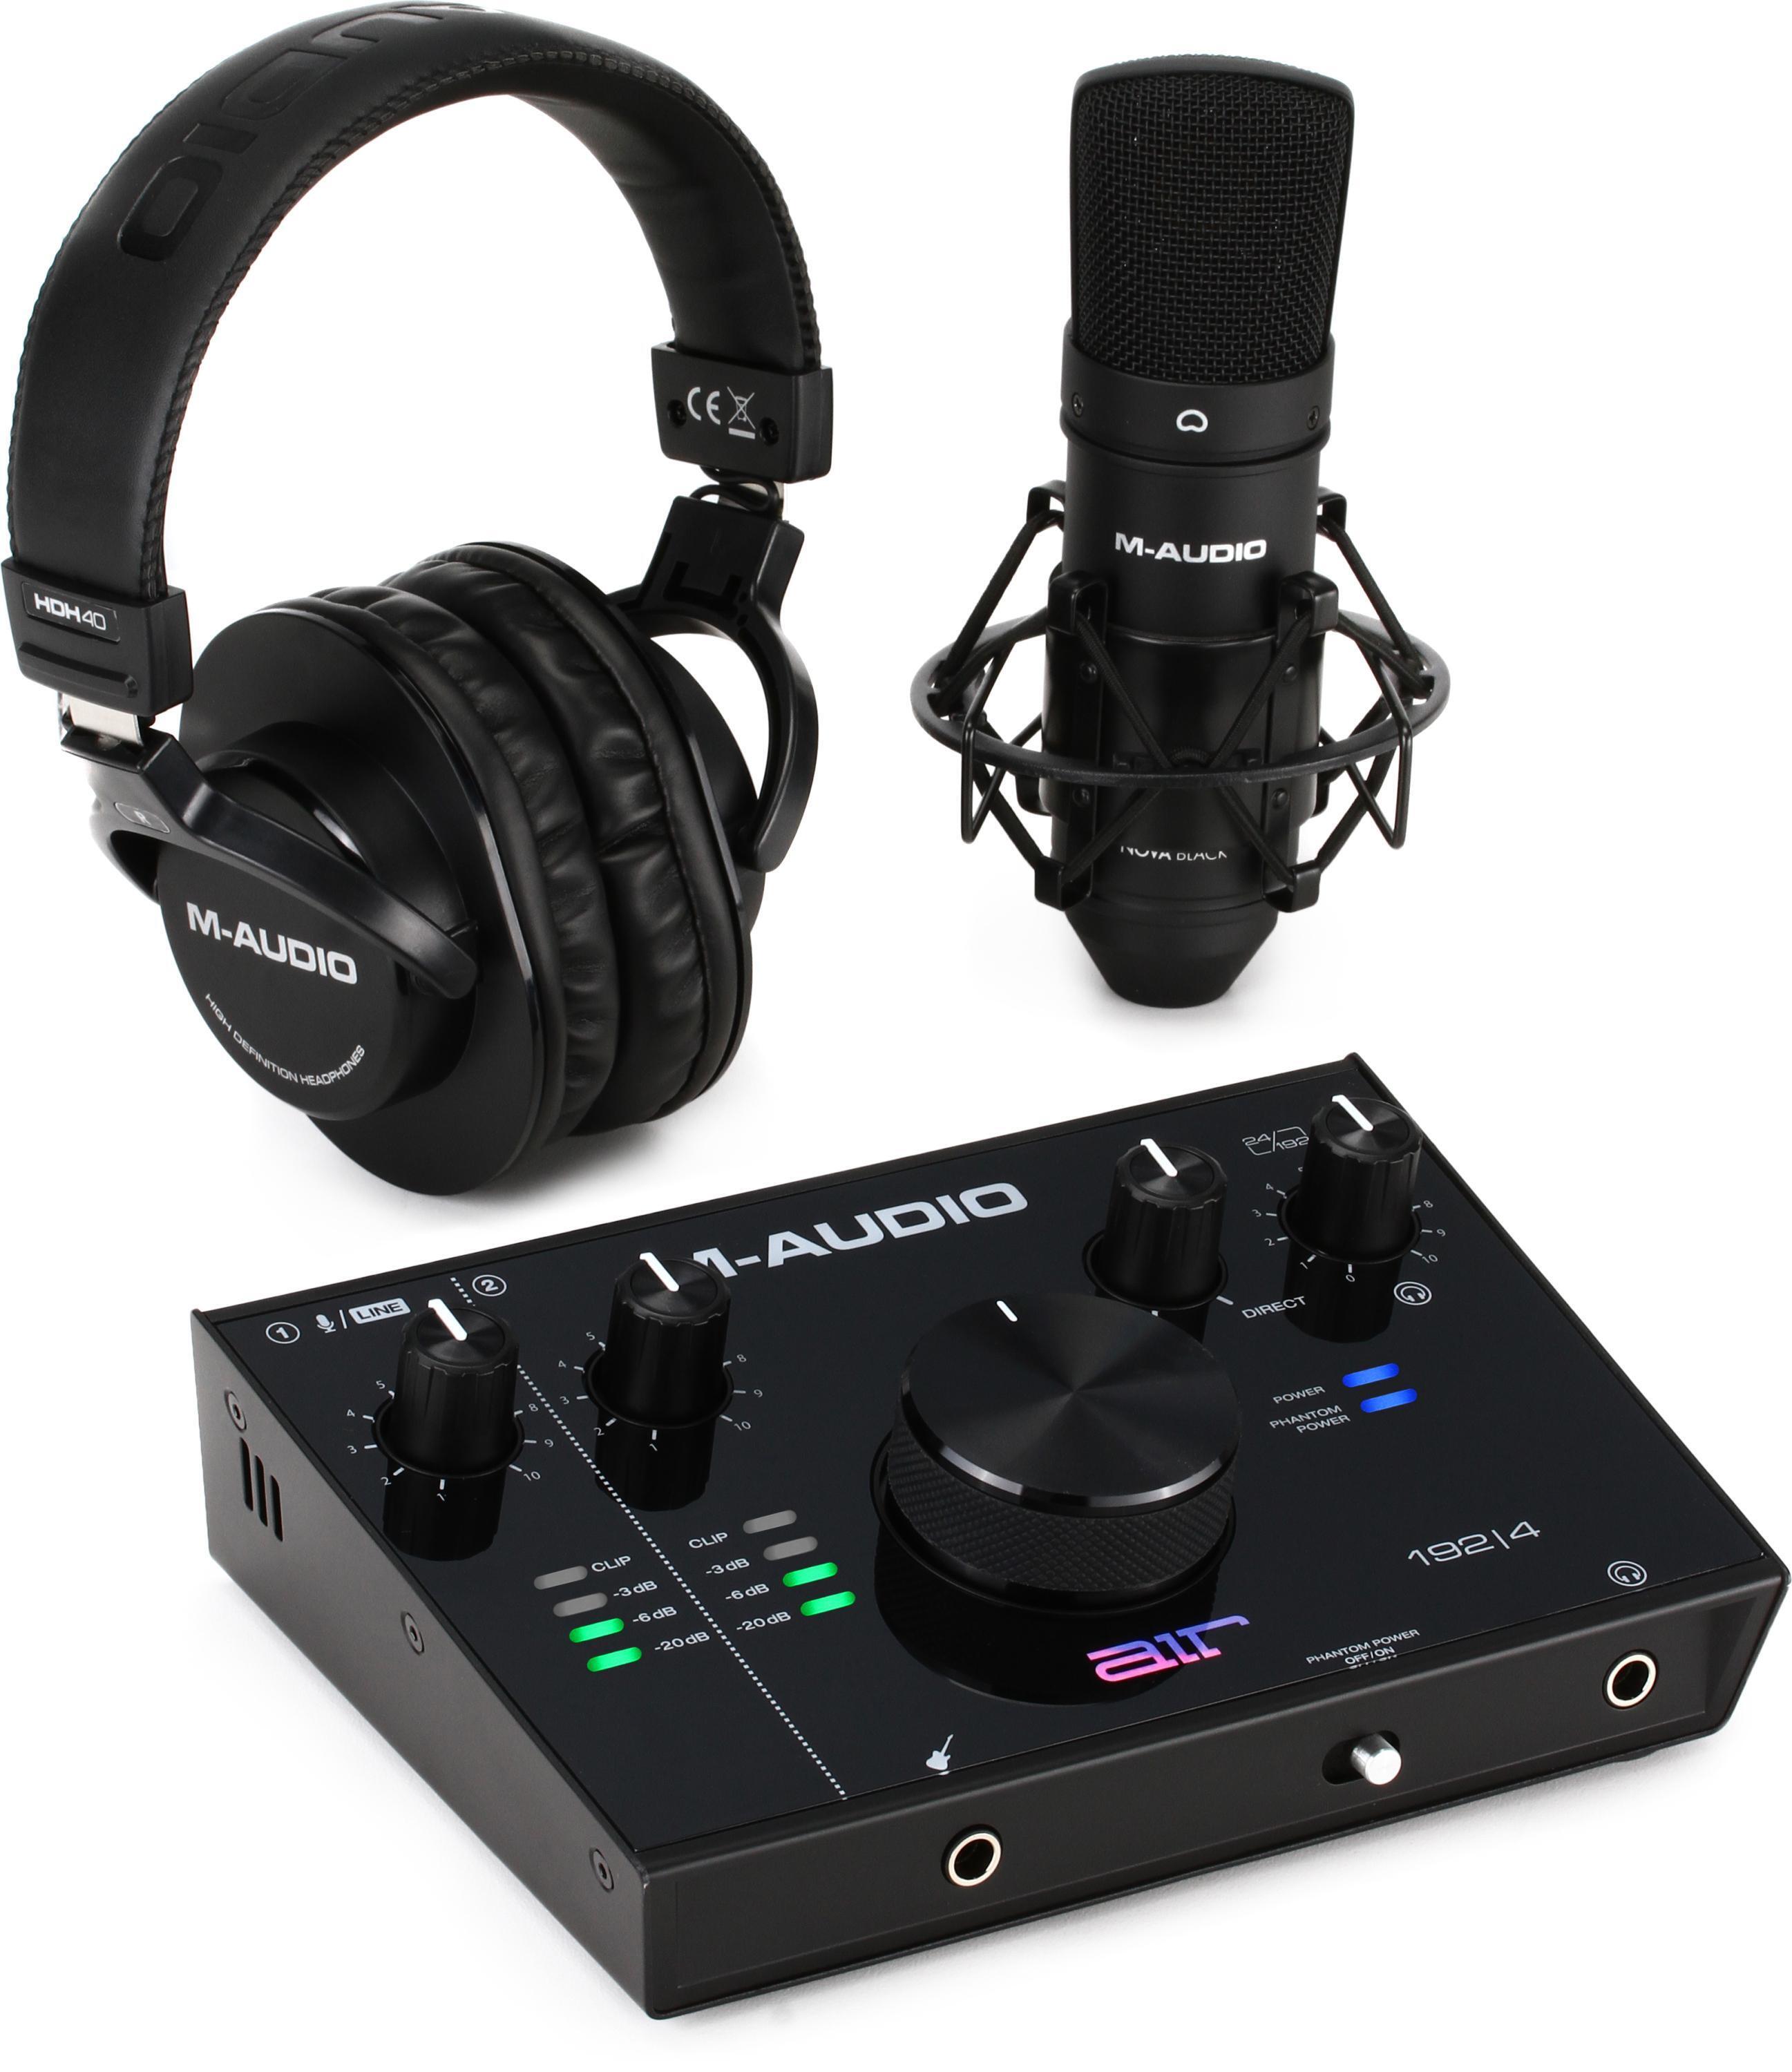 Bundled Item: M-Audio AIR 192|4 Vocal Studio Pro Complete Vocal Production Package